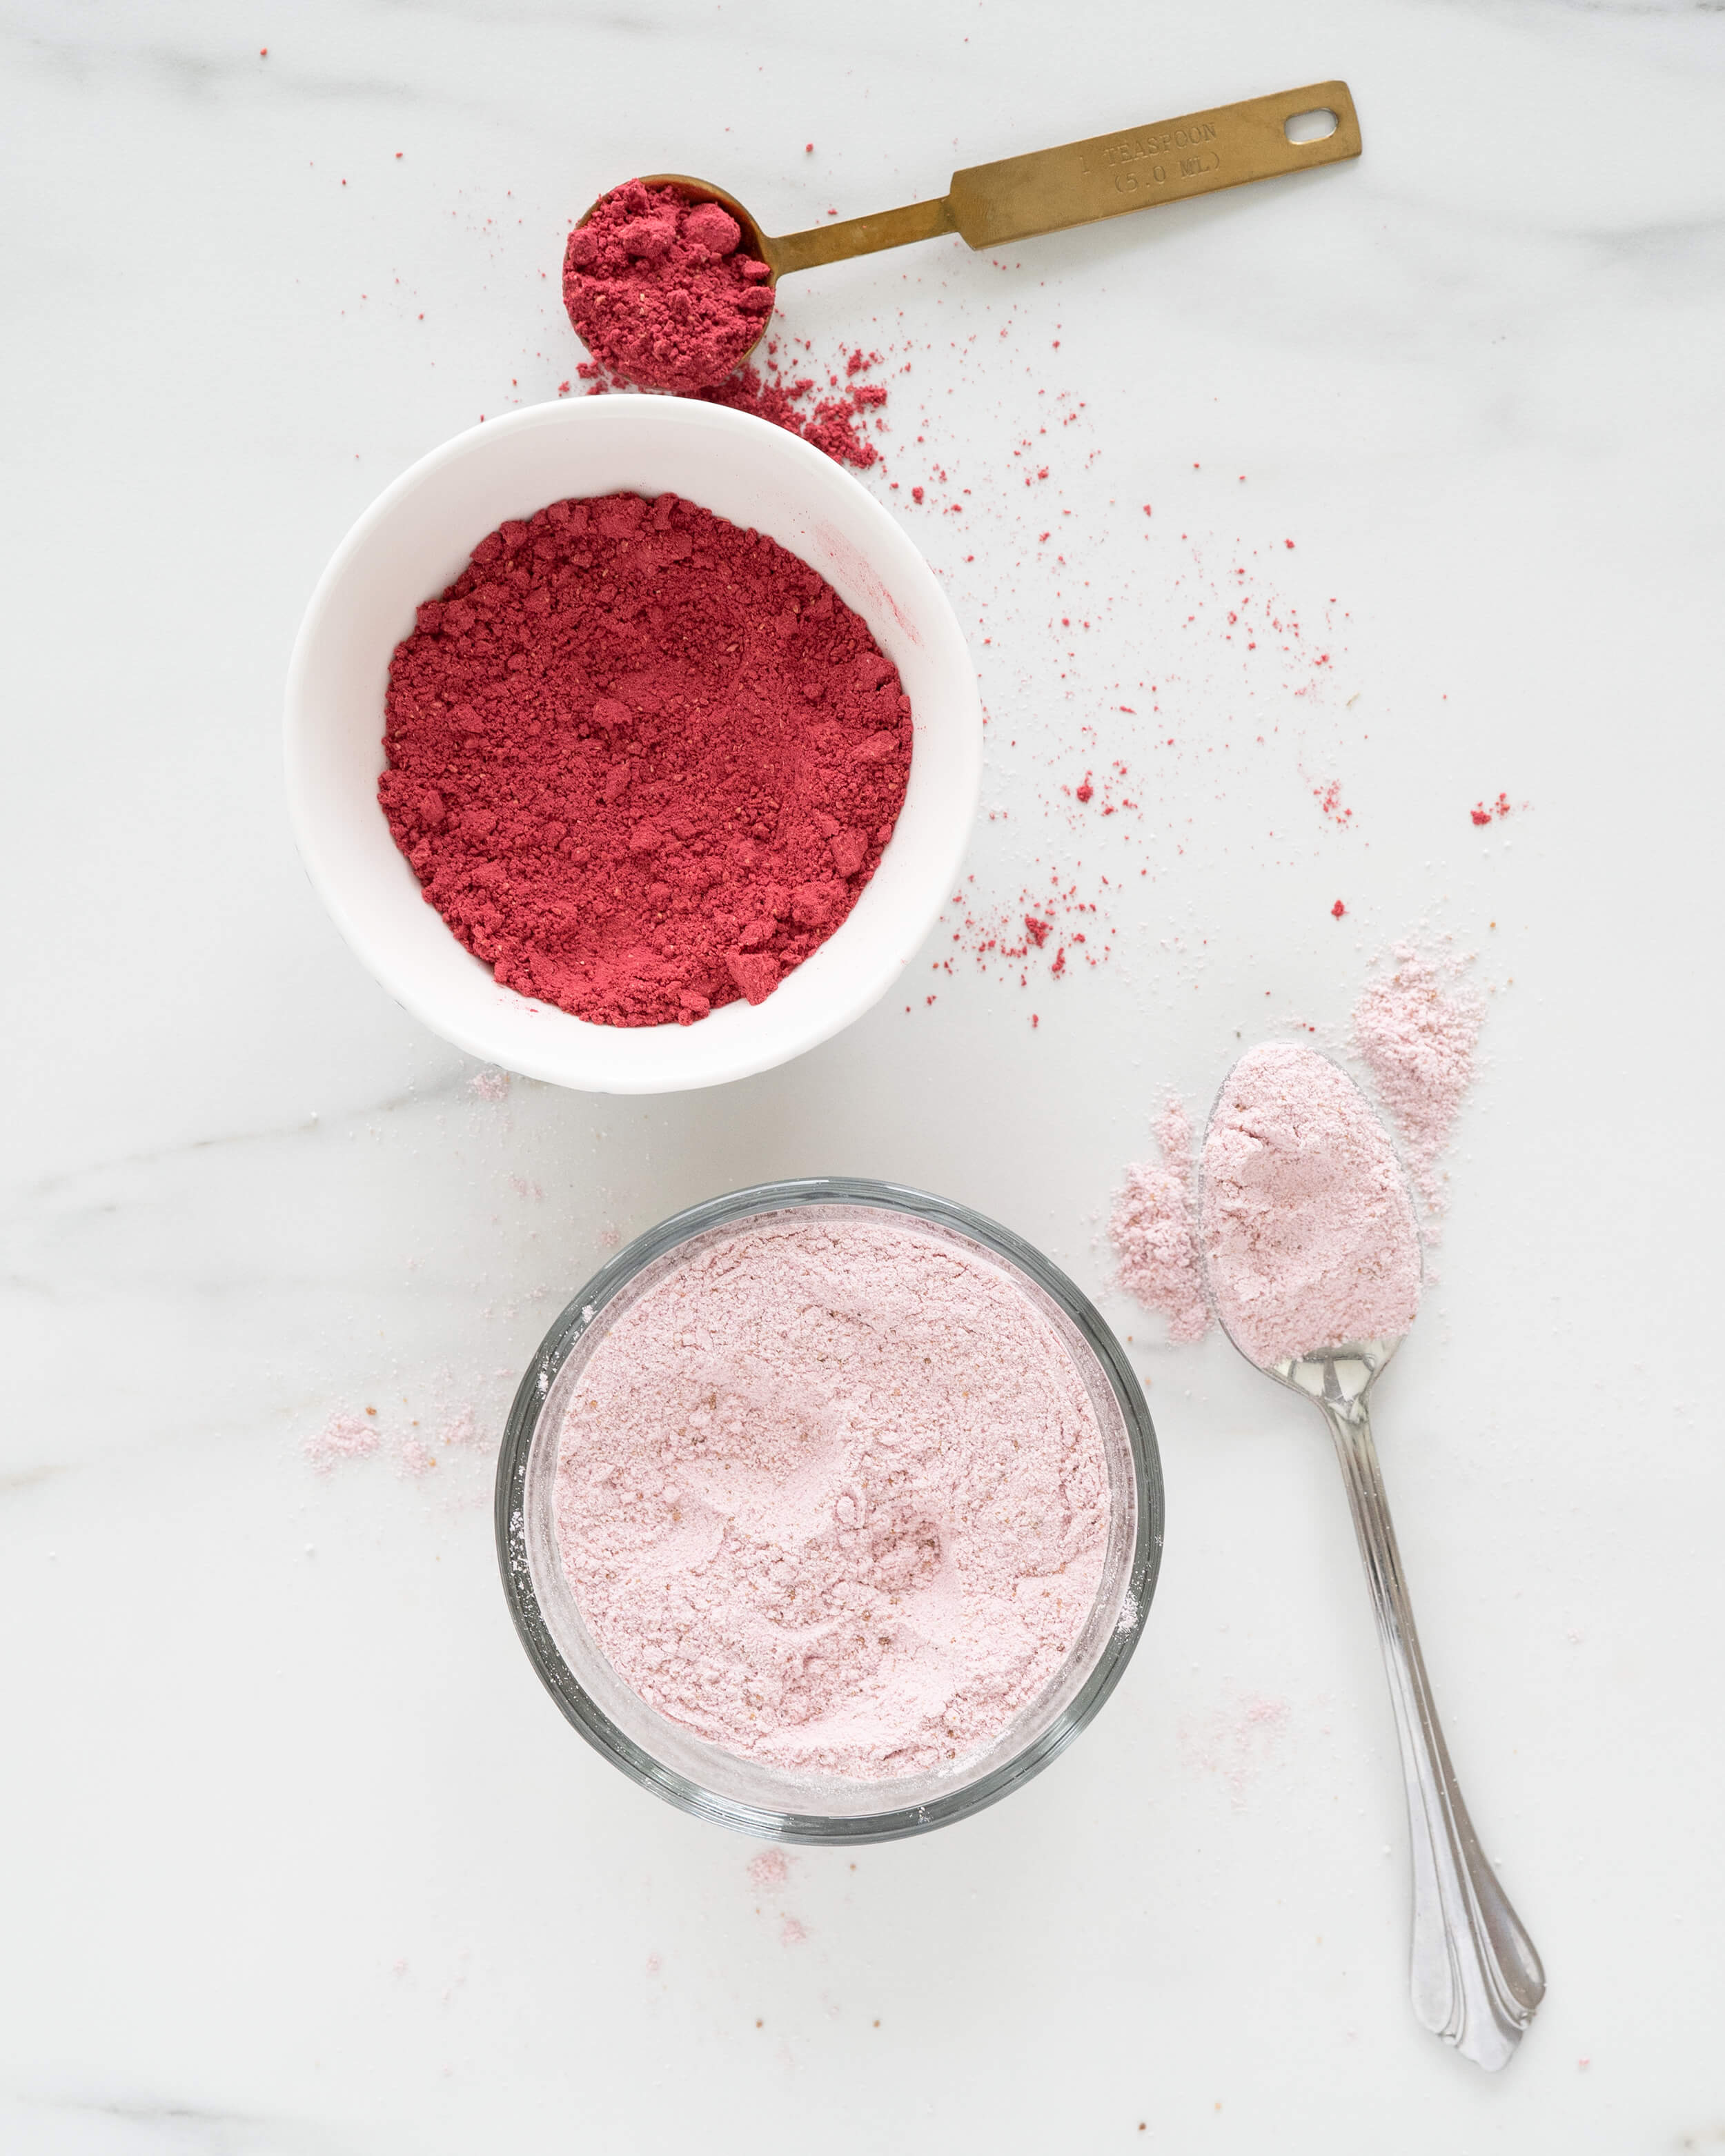 raspberry powder and beet powder